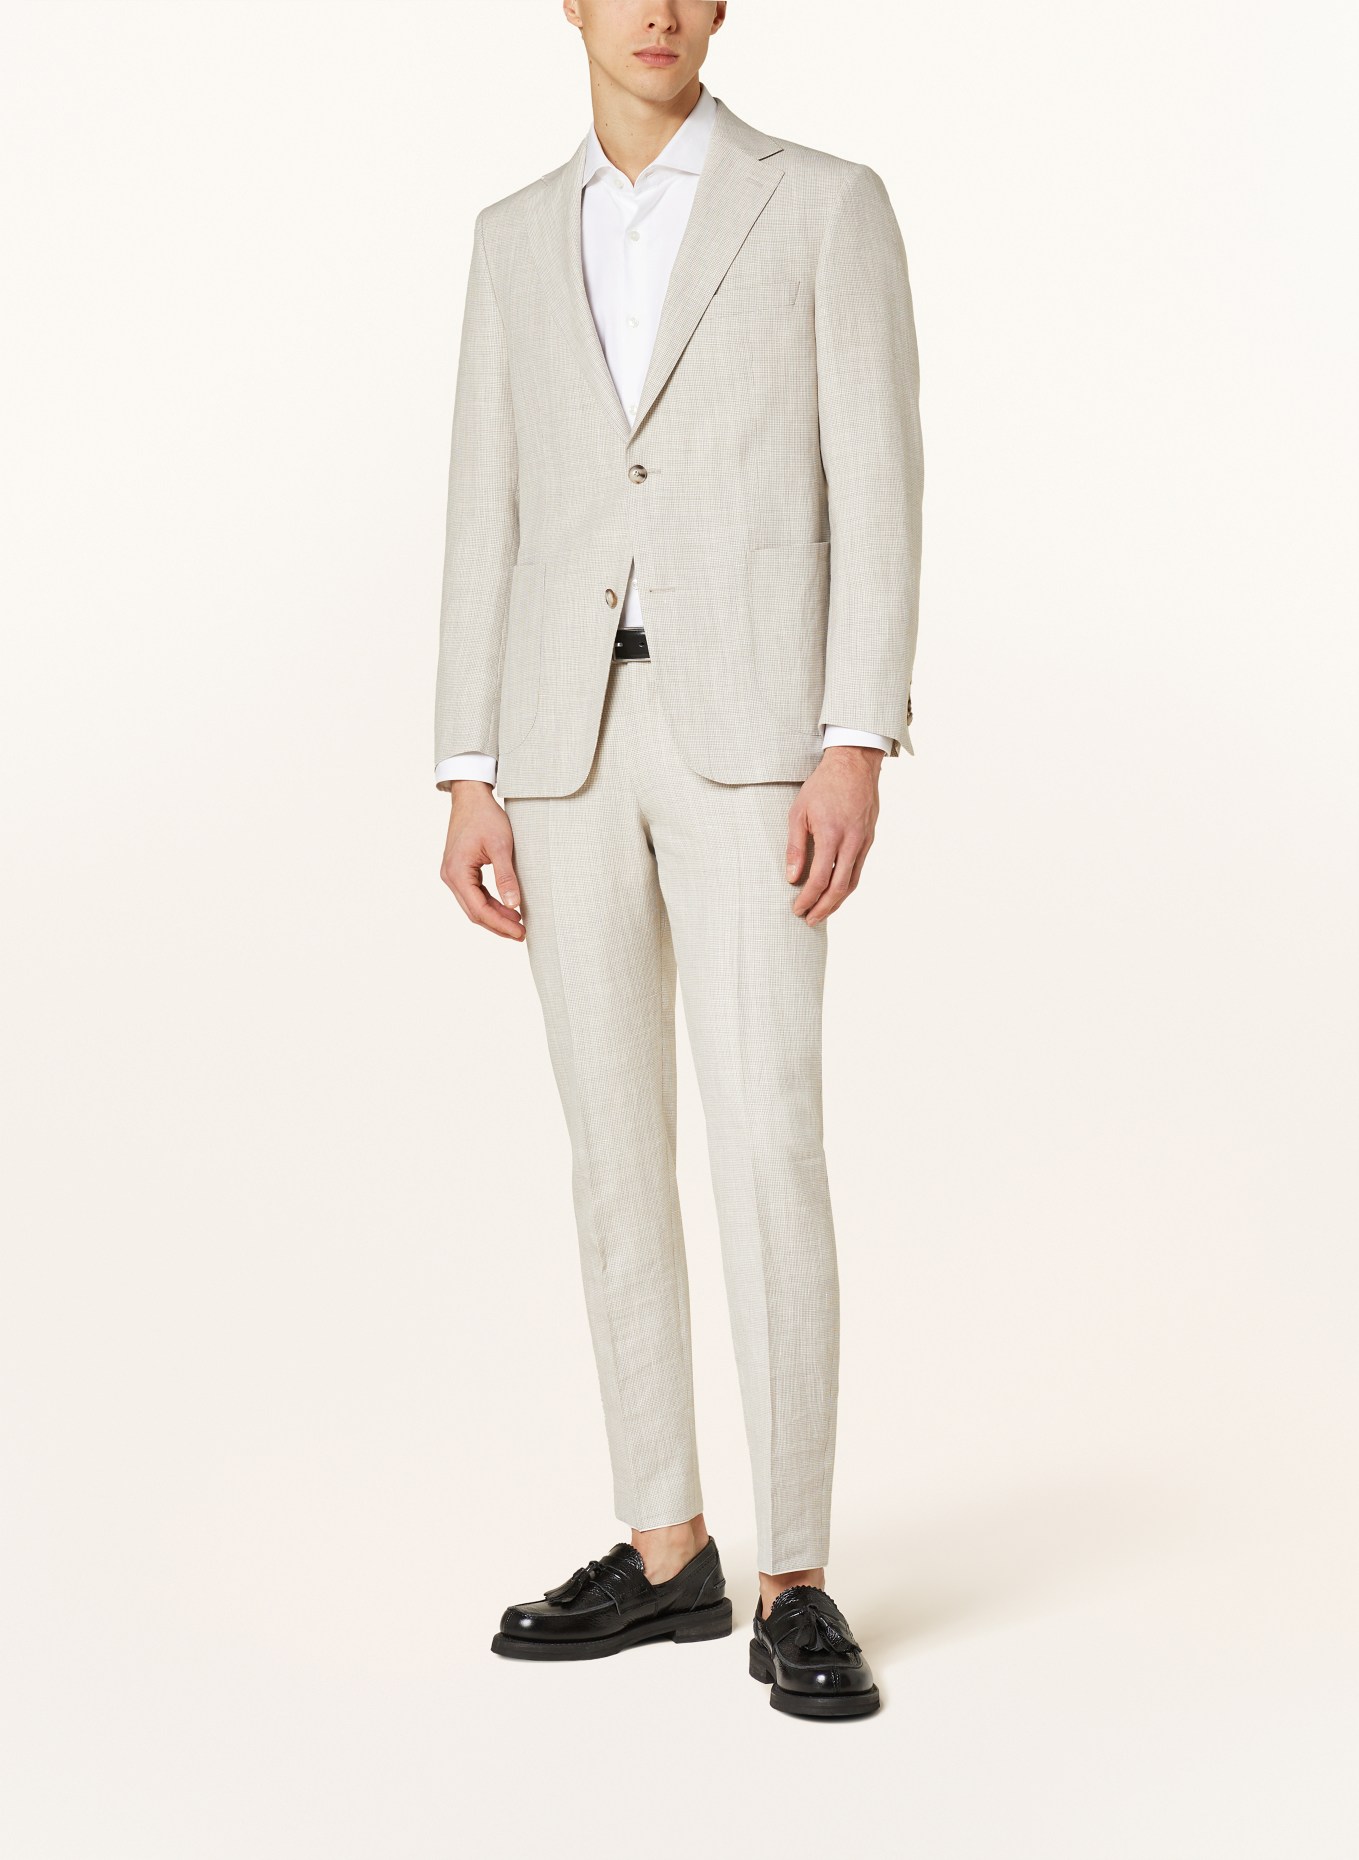 EDUARD DRESSLER Suit jacket MATTEO comfort fit with linen, Color: 070 BEIGE (Image 2)